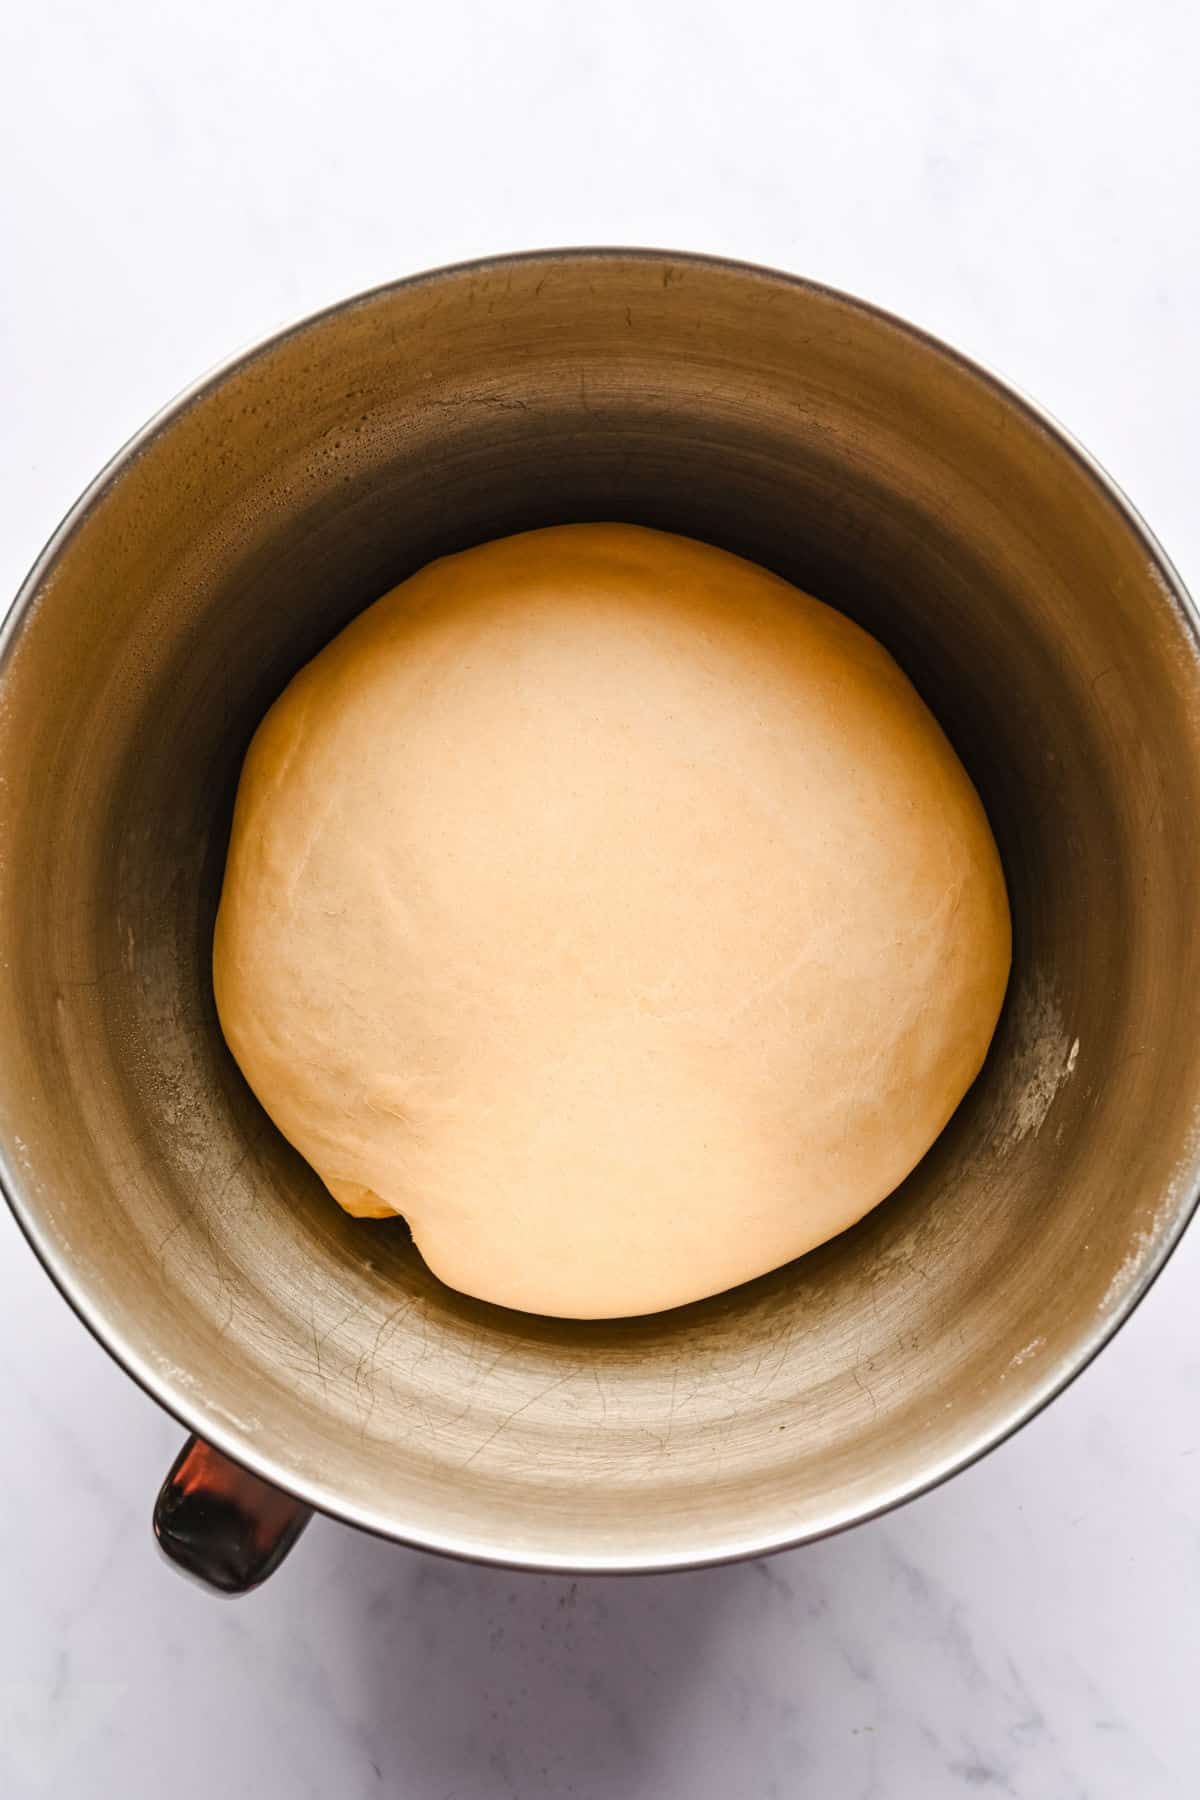 Risen cinnamon roll dough in a silver mixing bowl. 